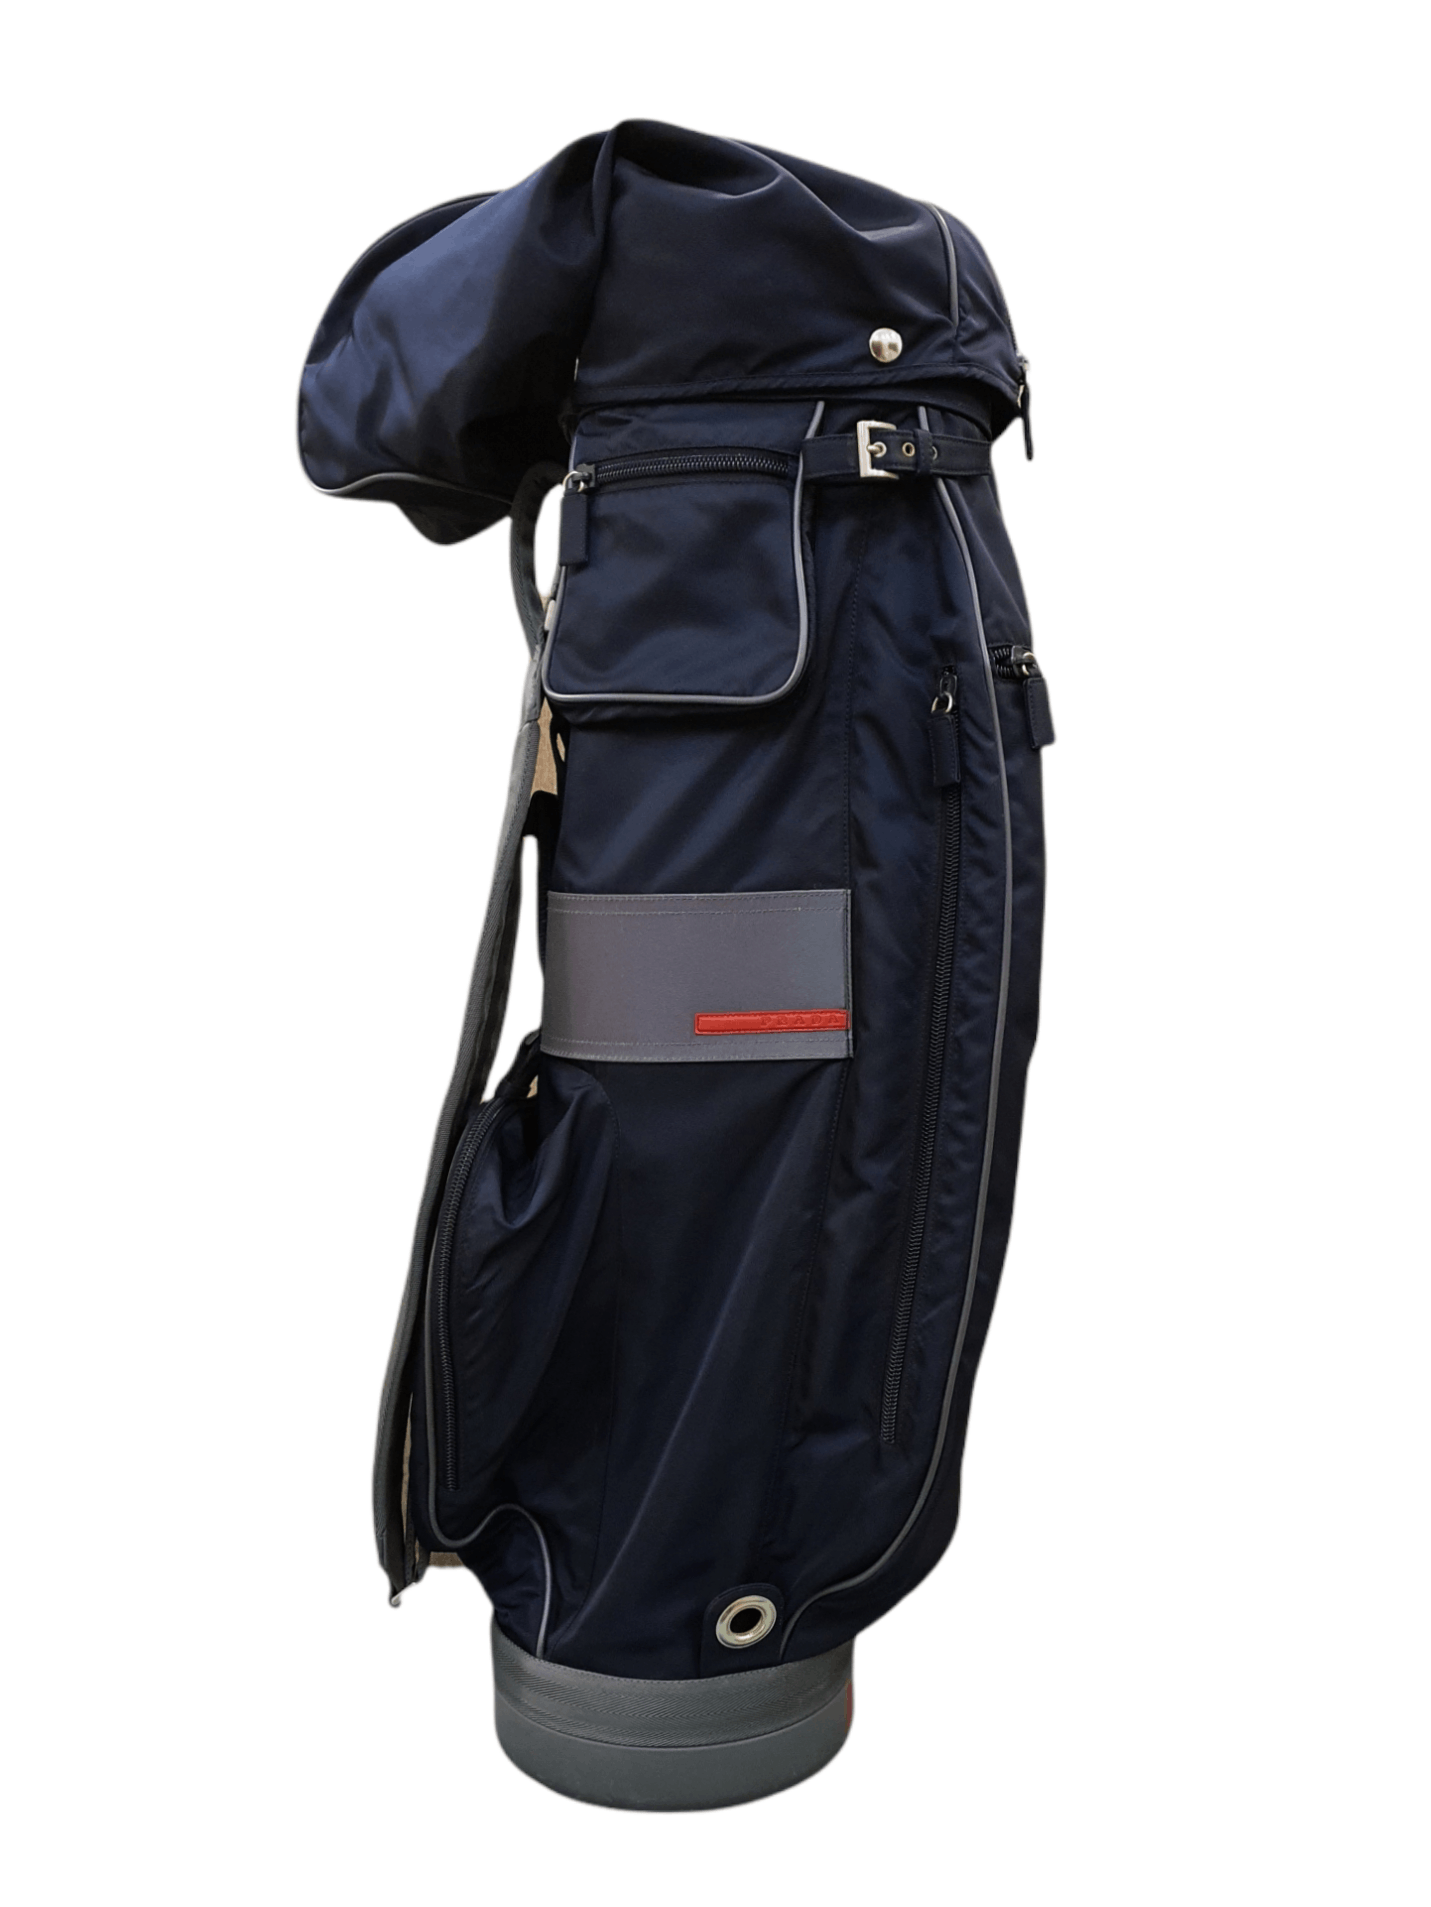 Buy Pre-Owned Prada Linea Rossa Japan Exclusive Golf Bag - 0195